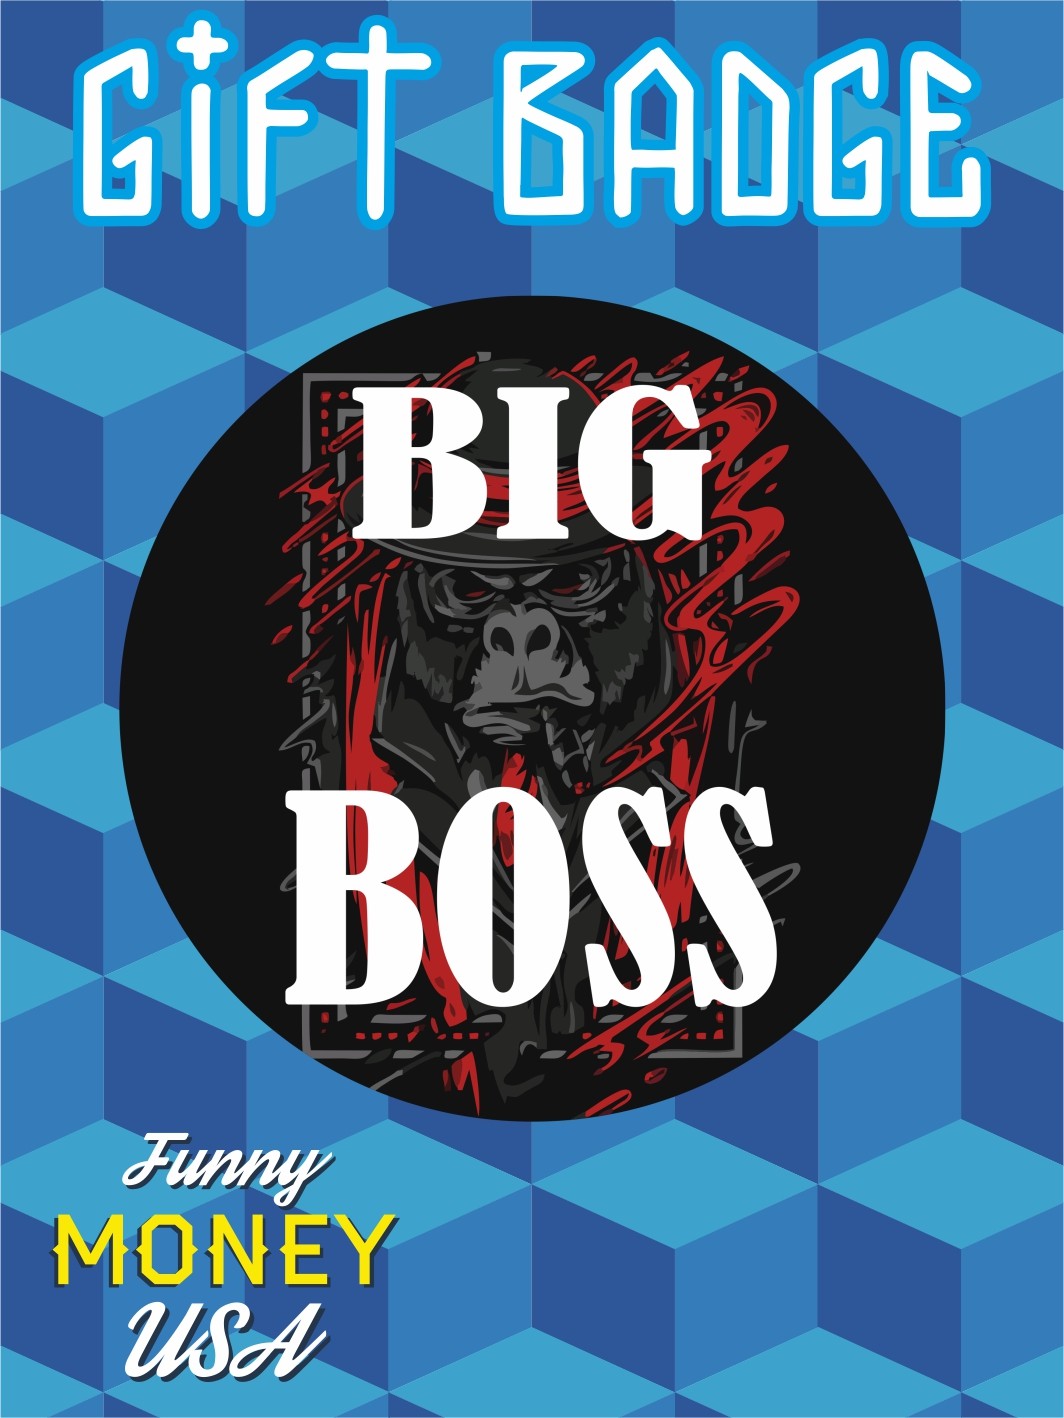 Gift badges "Big Boss"